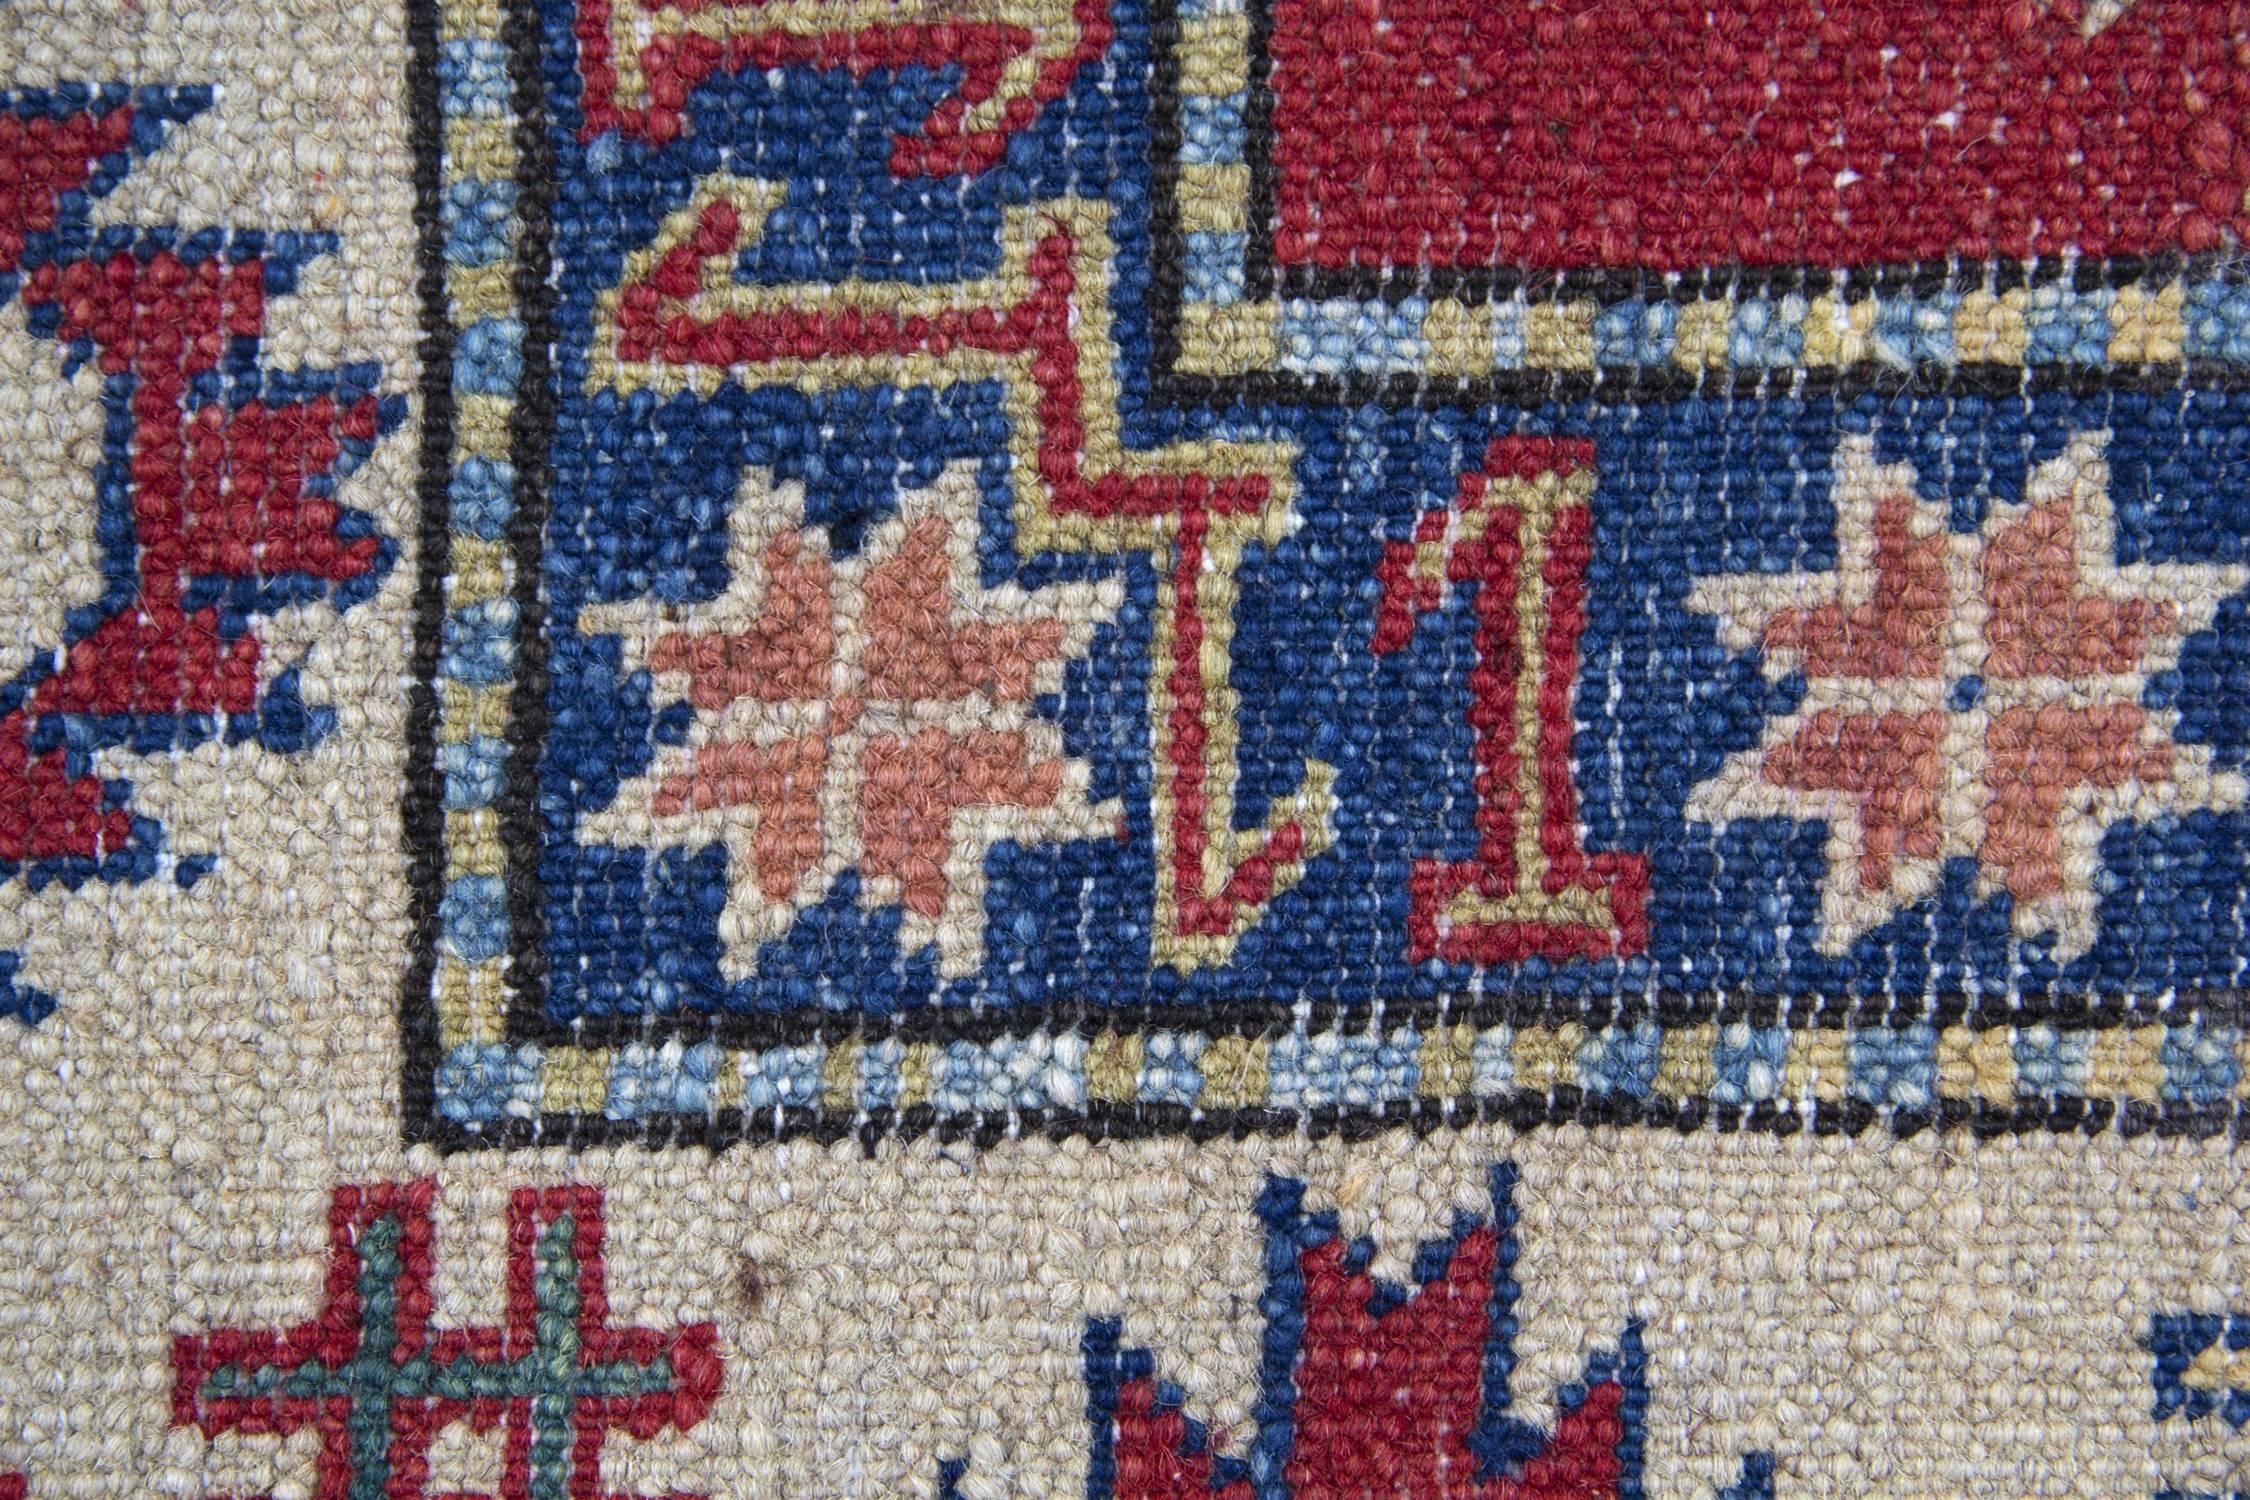 Kazak Handmade Rugs, Red Afghan Geometric Rugs, Carpet for Sale 182 x 265 cm  For Sale